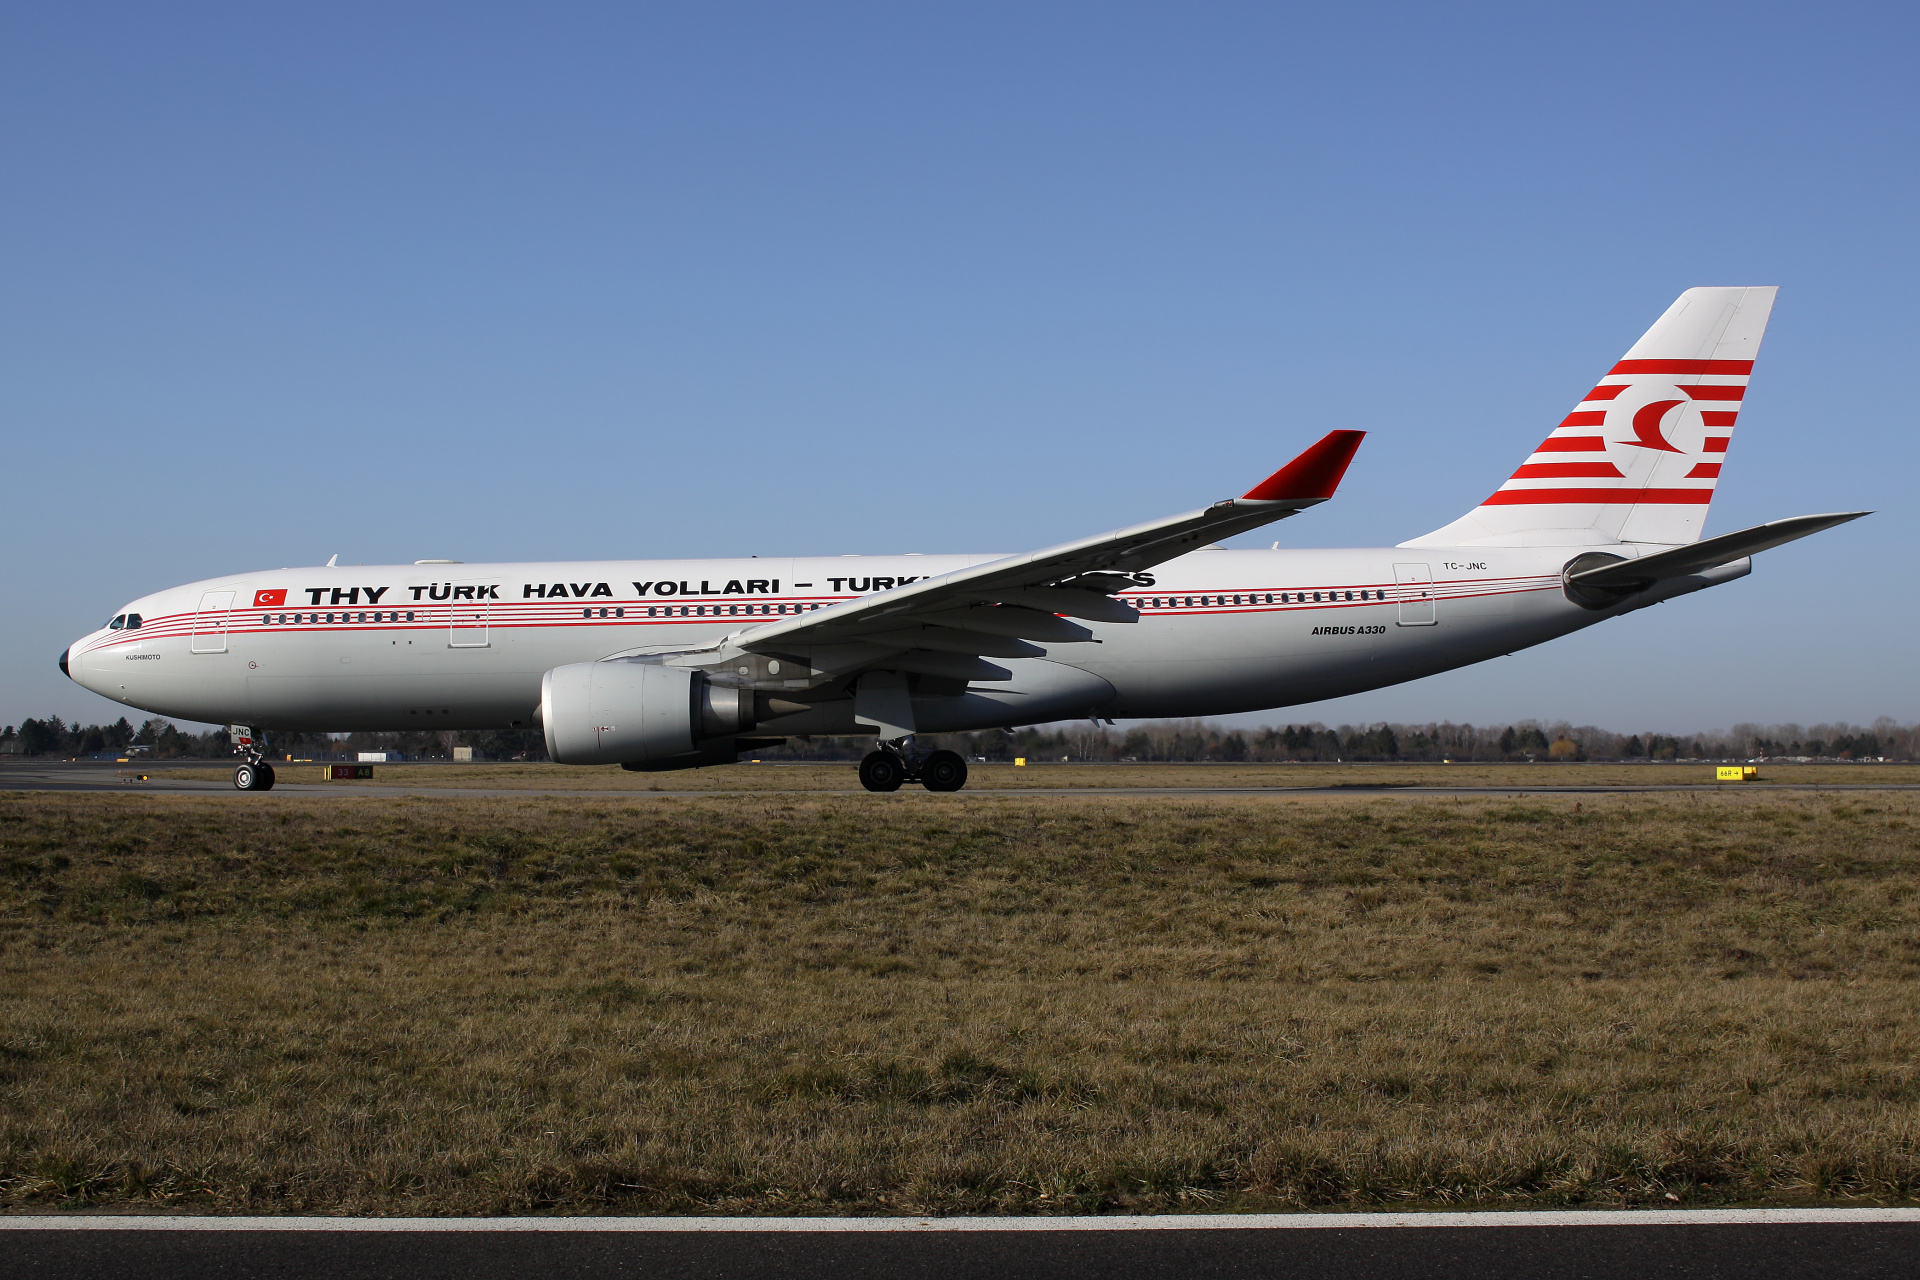 TC-JNC, THY Turkish Airlines (retro livery) (Aircraft » EPWA Spotting » Airbus A330-200)